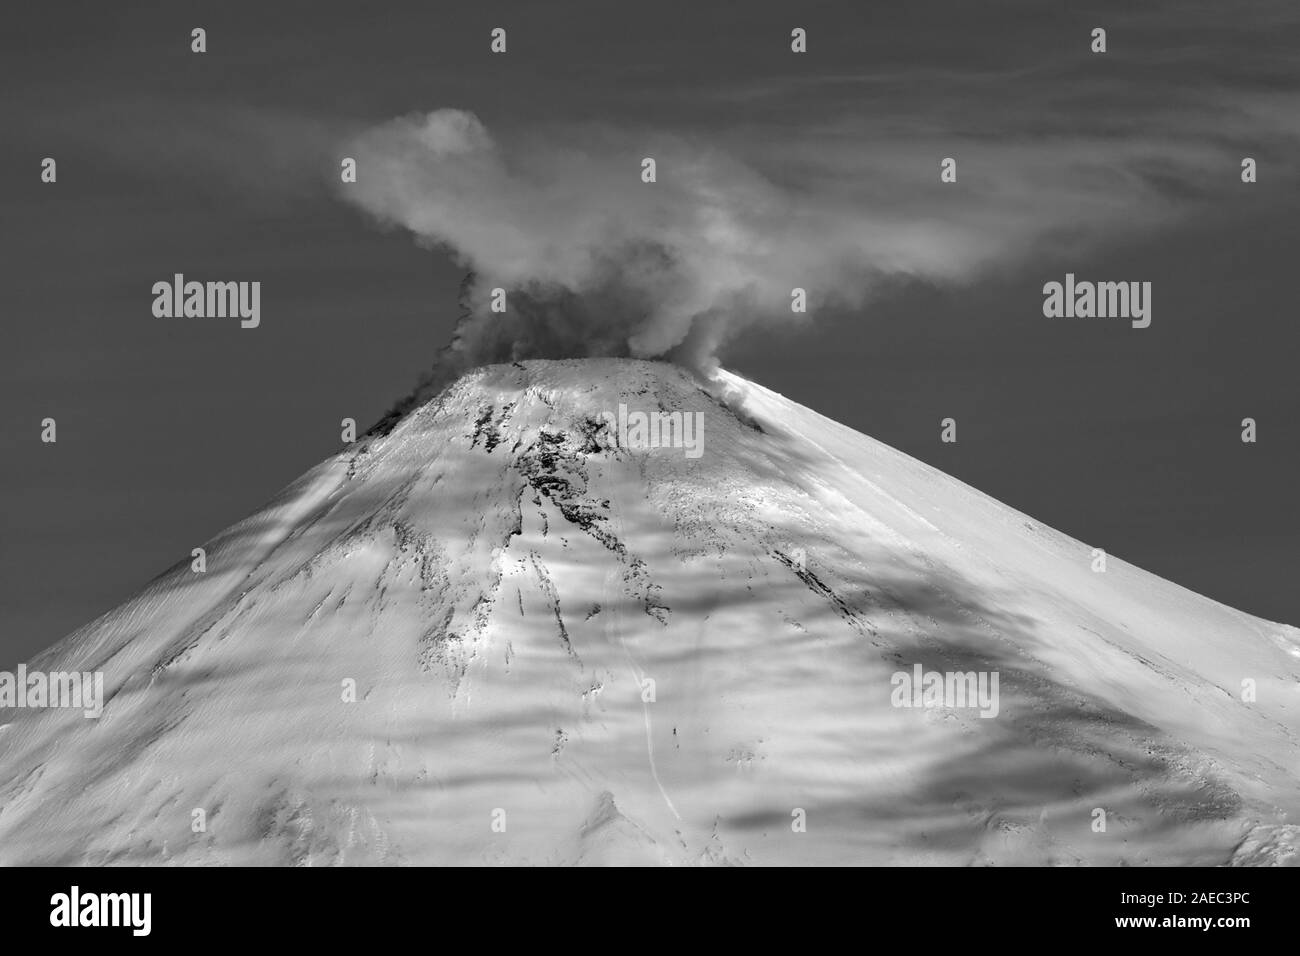 Volcano Avachinskaya Sopka - active mount of Kamchatka Peninsula. Winter volcanic activity of mount: steam, gas, ashes eruption from crater Stock Photo